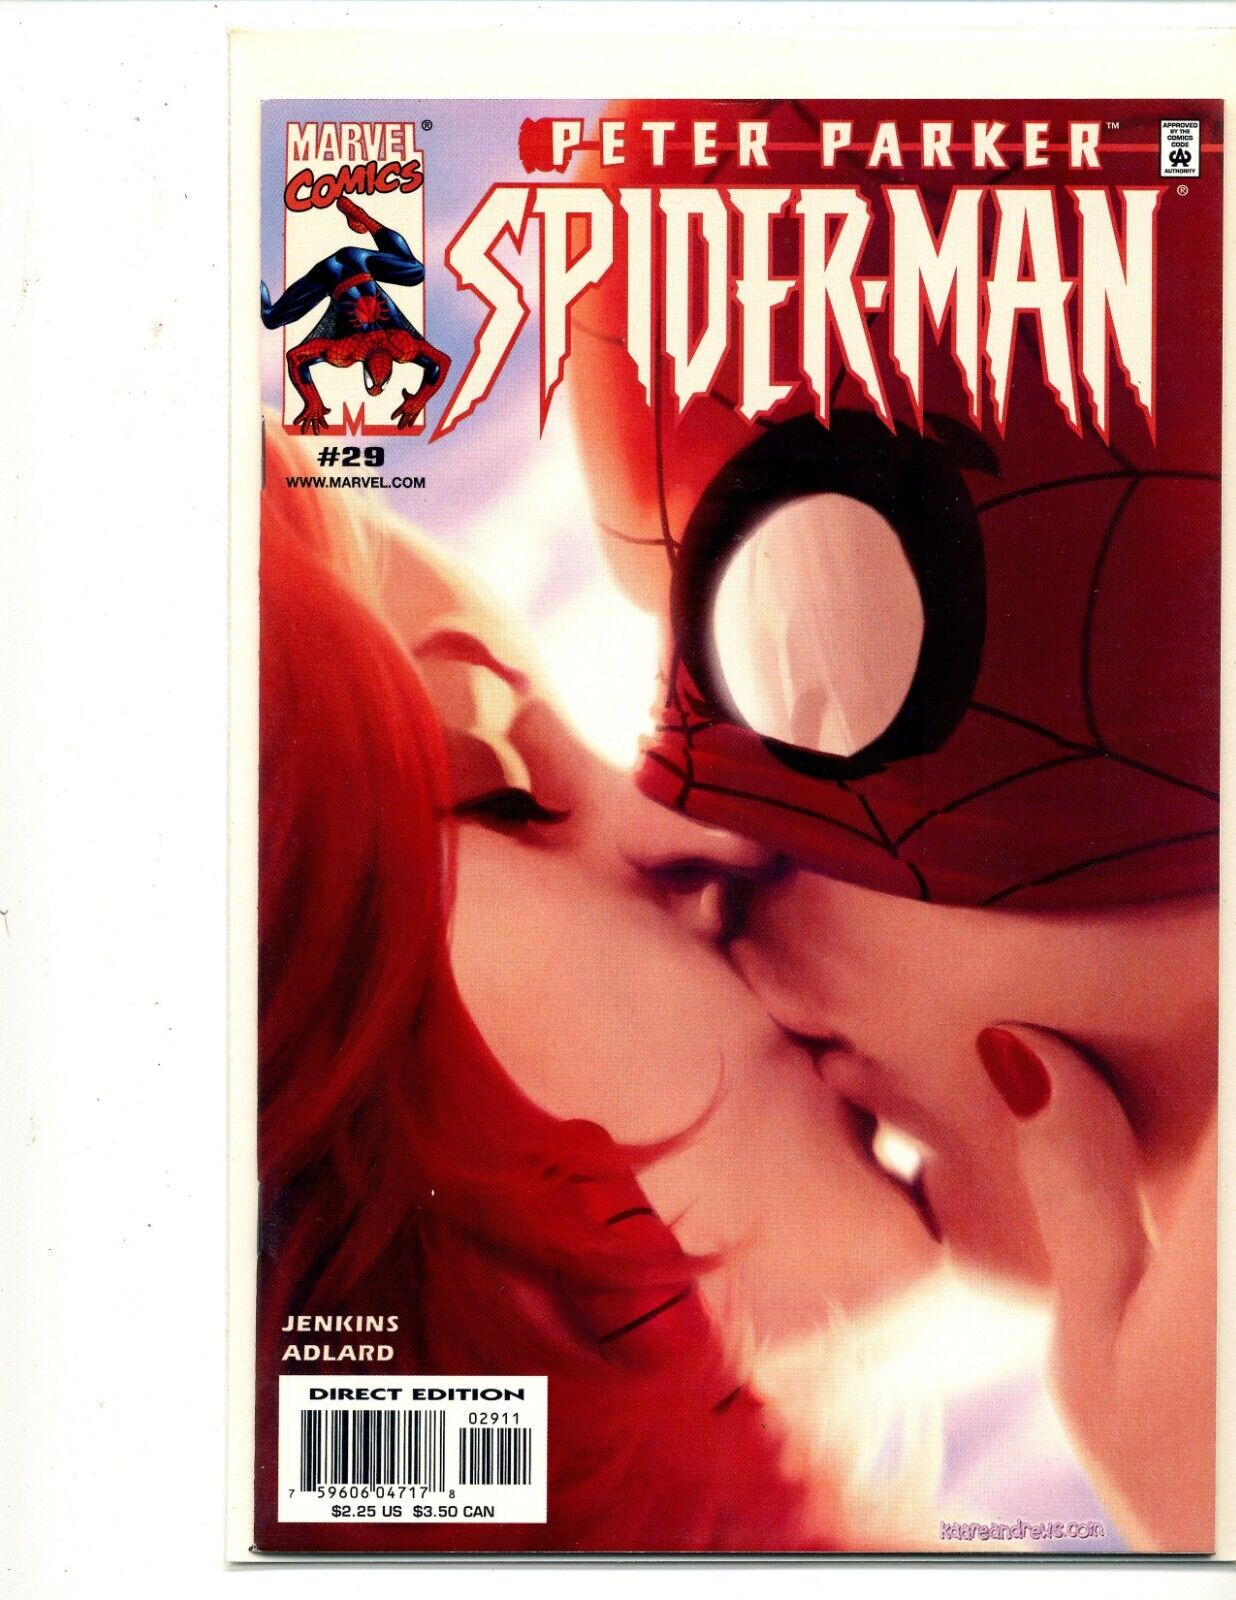 Marvels Peter Parker Spiderman the new beginning #29